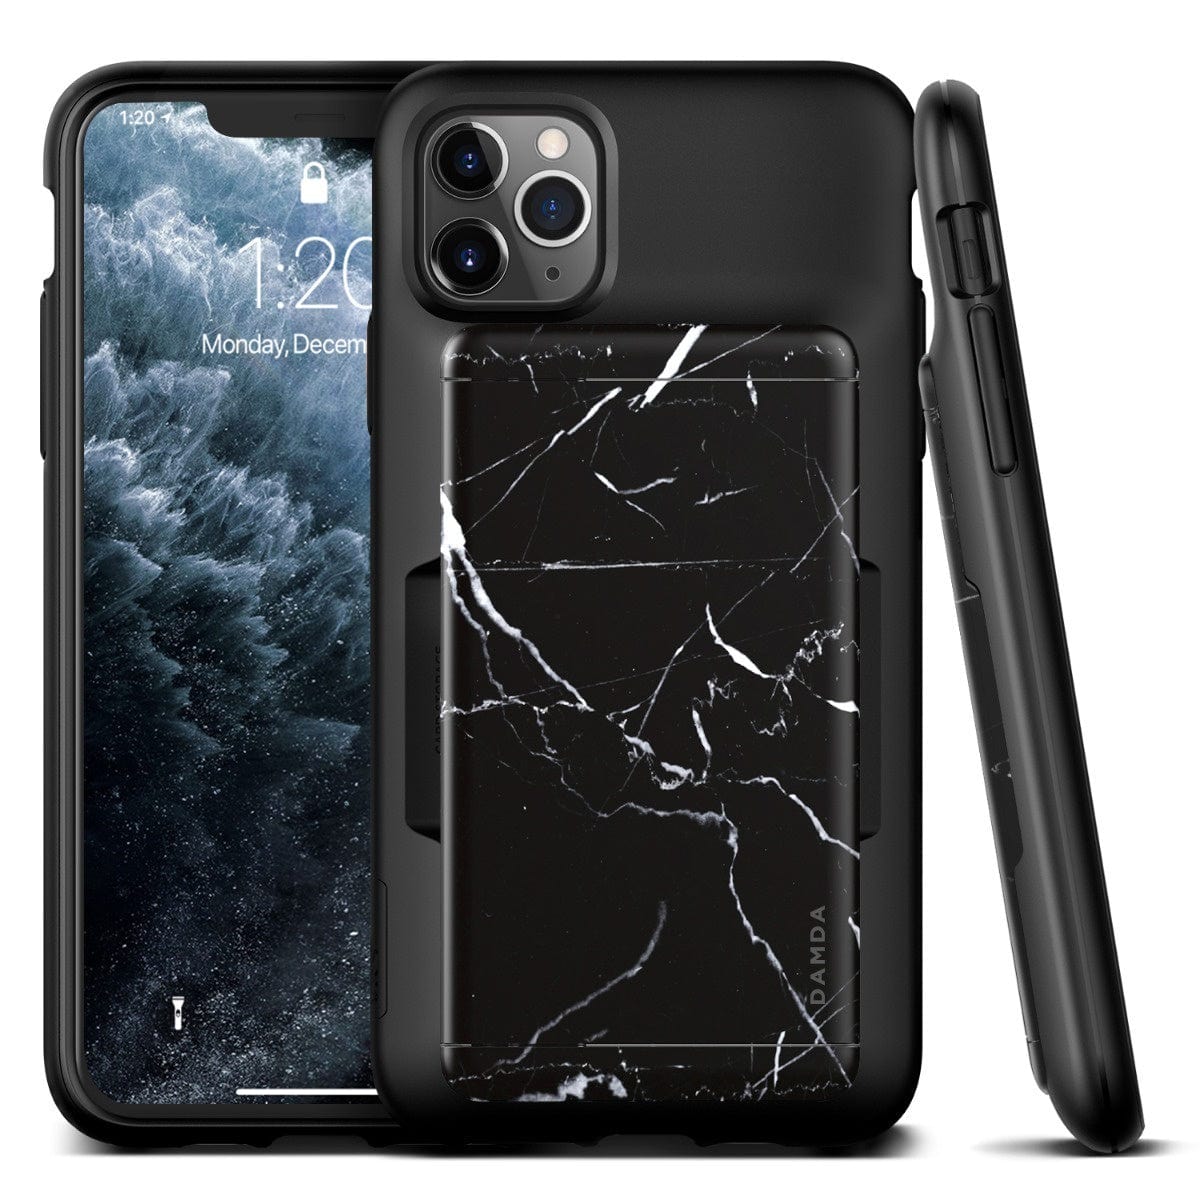 iPhone 11 Pro Max Case Damda Glide Black Marble